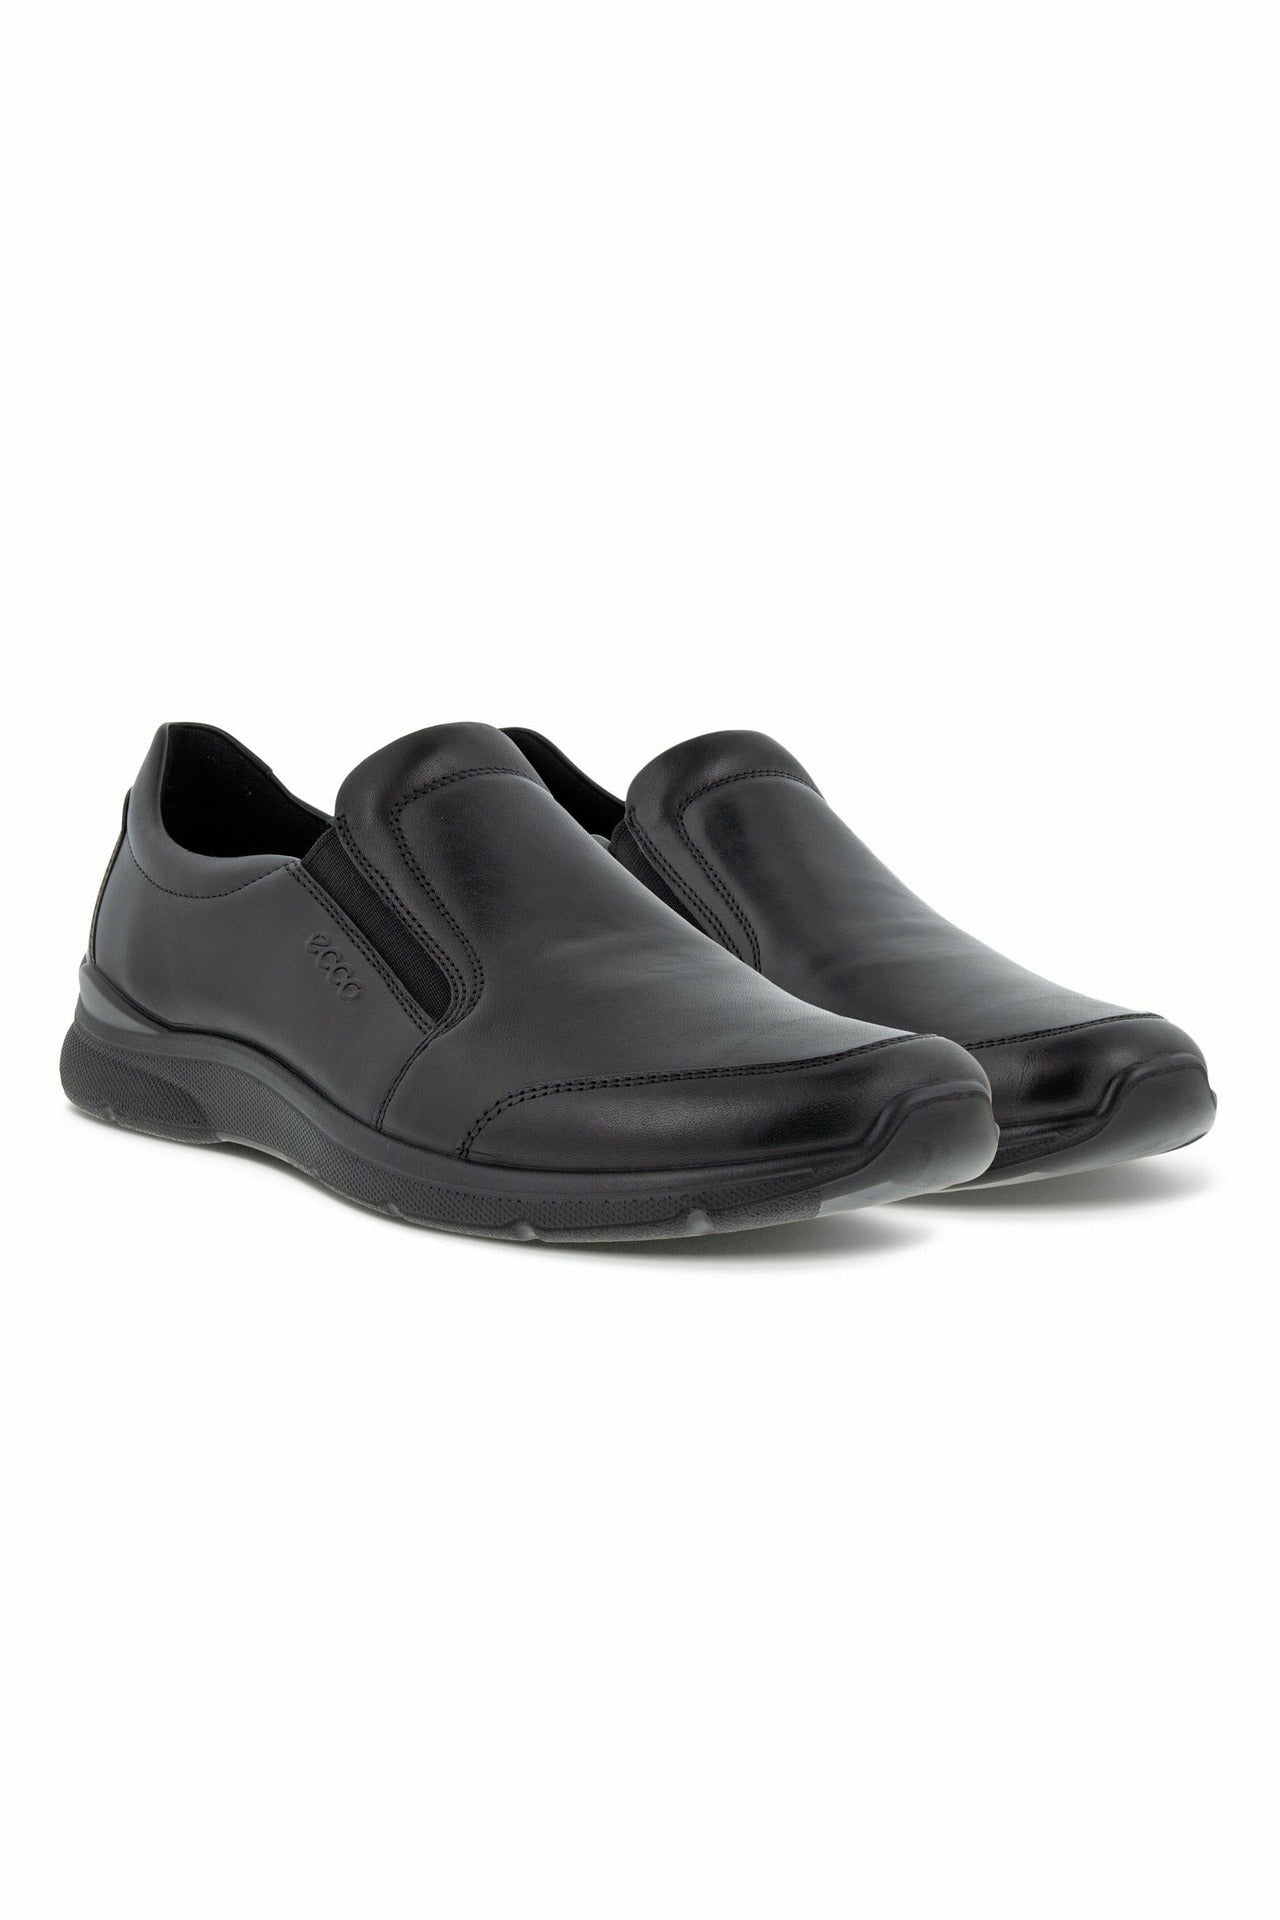 Ecco Irving Mens Slip on 511684-11001 Black - Meeks Shoes